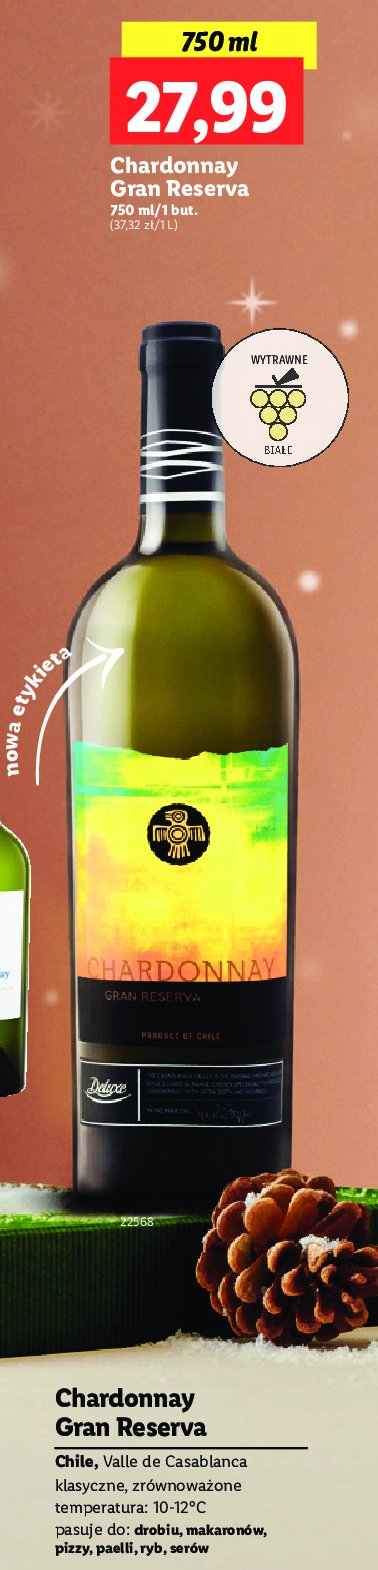 Wino Deluxe chardonnay gran reserva promocja